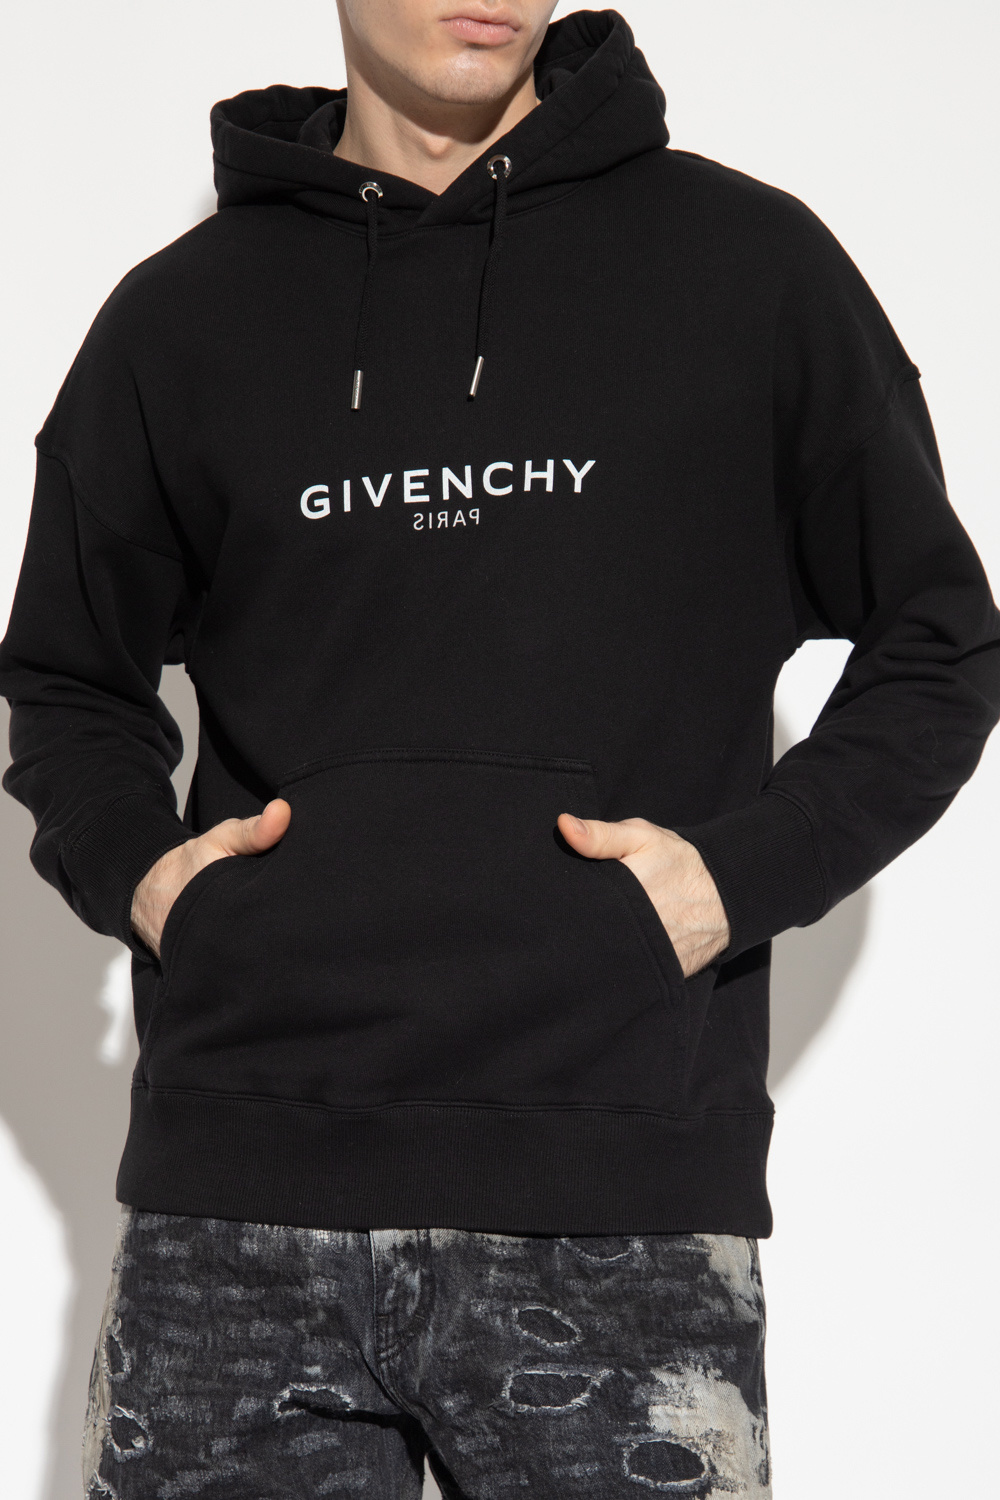 Givenchy givenchy bandana patch oversized t shirt item